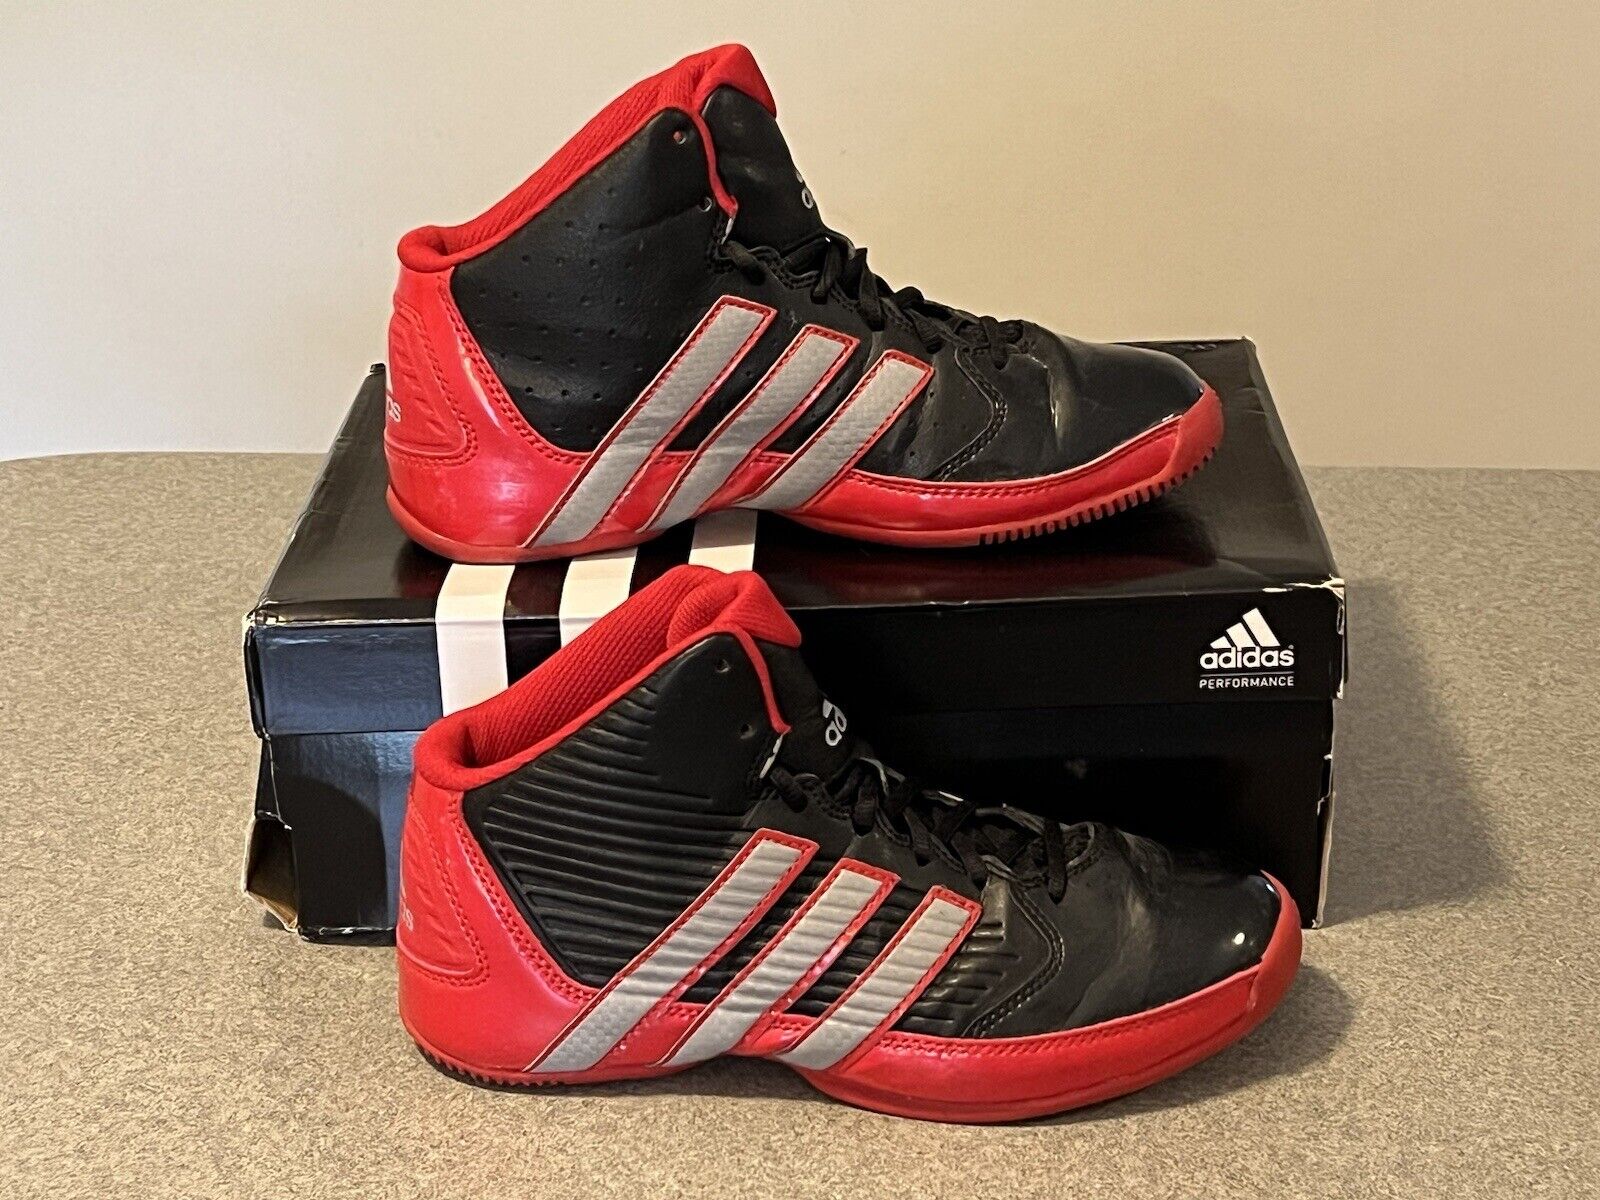 Adidas Boys TD K Black and Scarlett Red Size | eBay